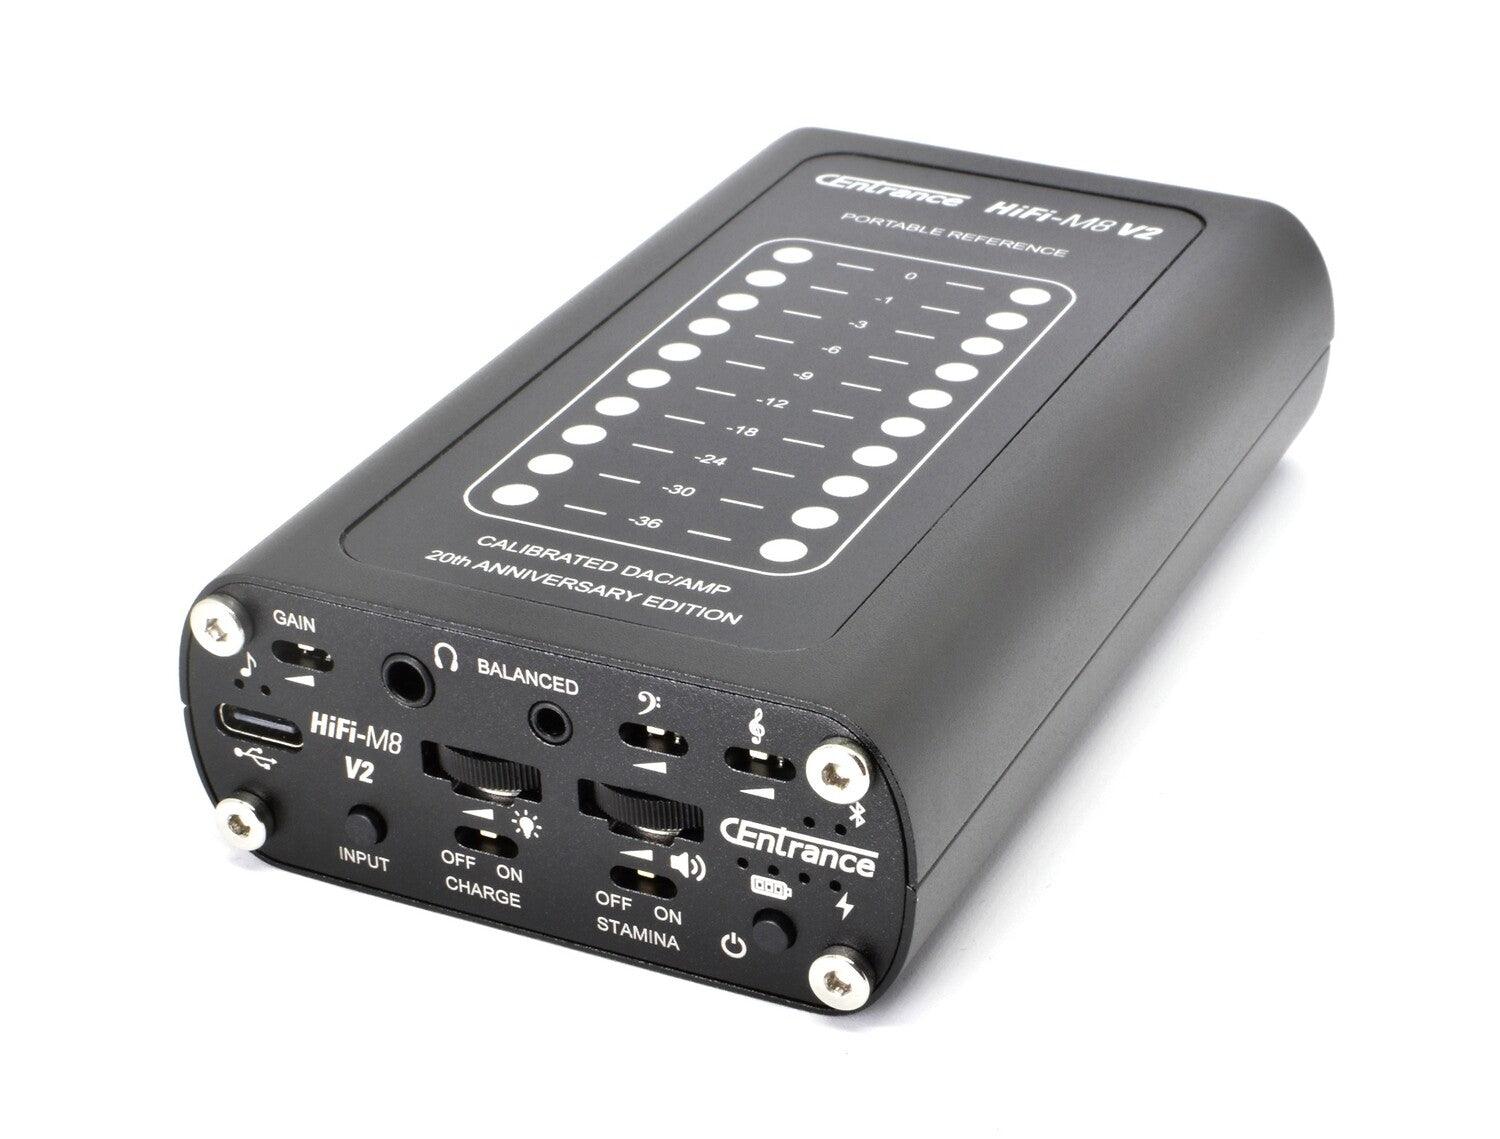 CEntrance HIFI-M8 V2 Portable Audiophile DAC and Balanced Bluetooth Amplifier - Koala Audio